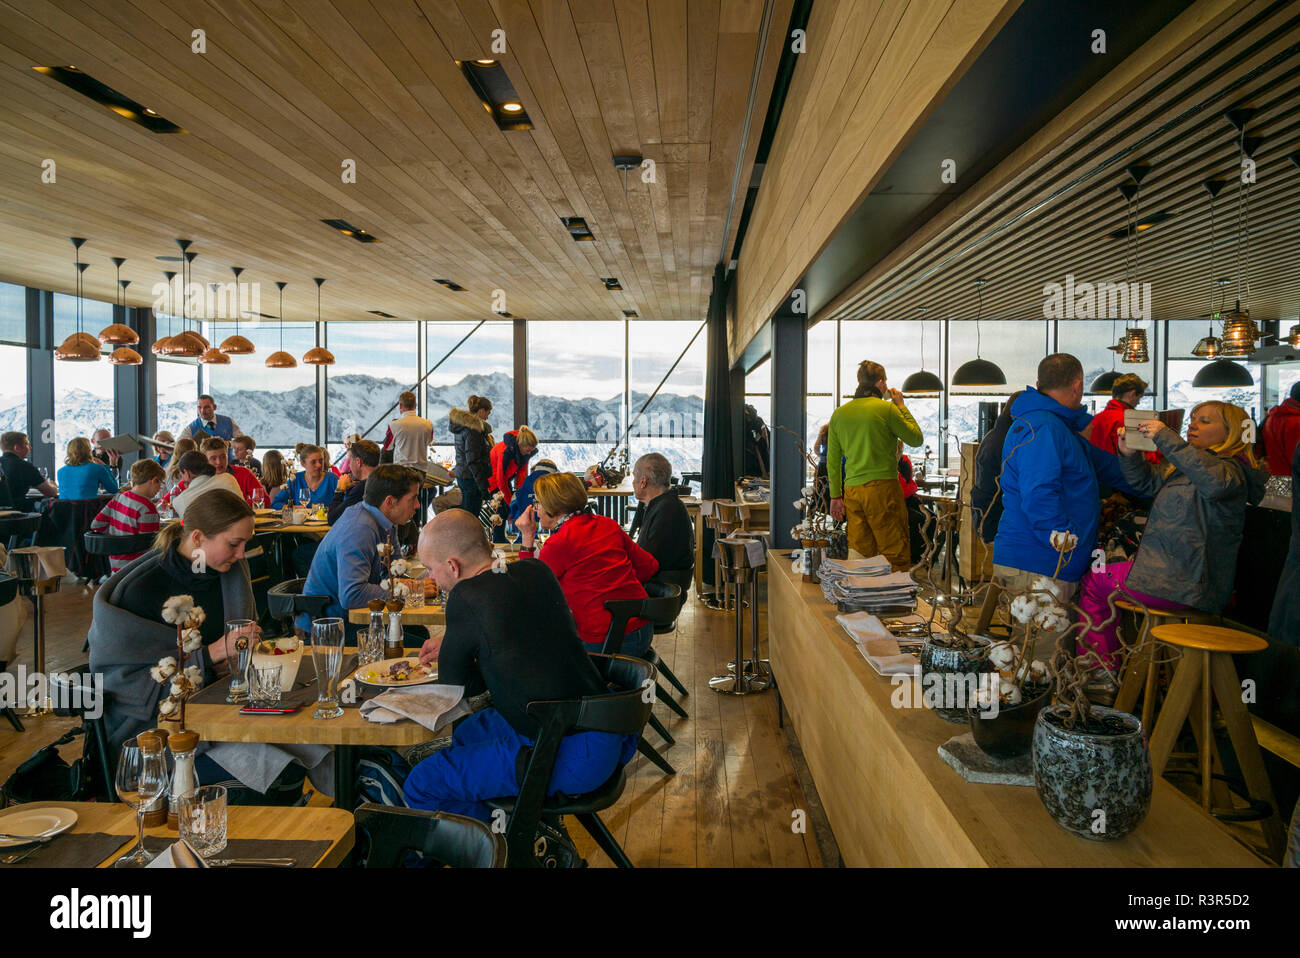 Austria, Tyrol, Otztal, Solden, Gaislachkogl ski mountain, Ice Q gourmet restaurant interior Stock Photo